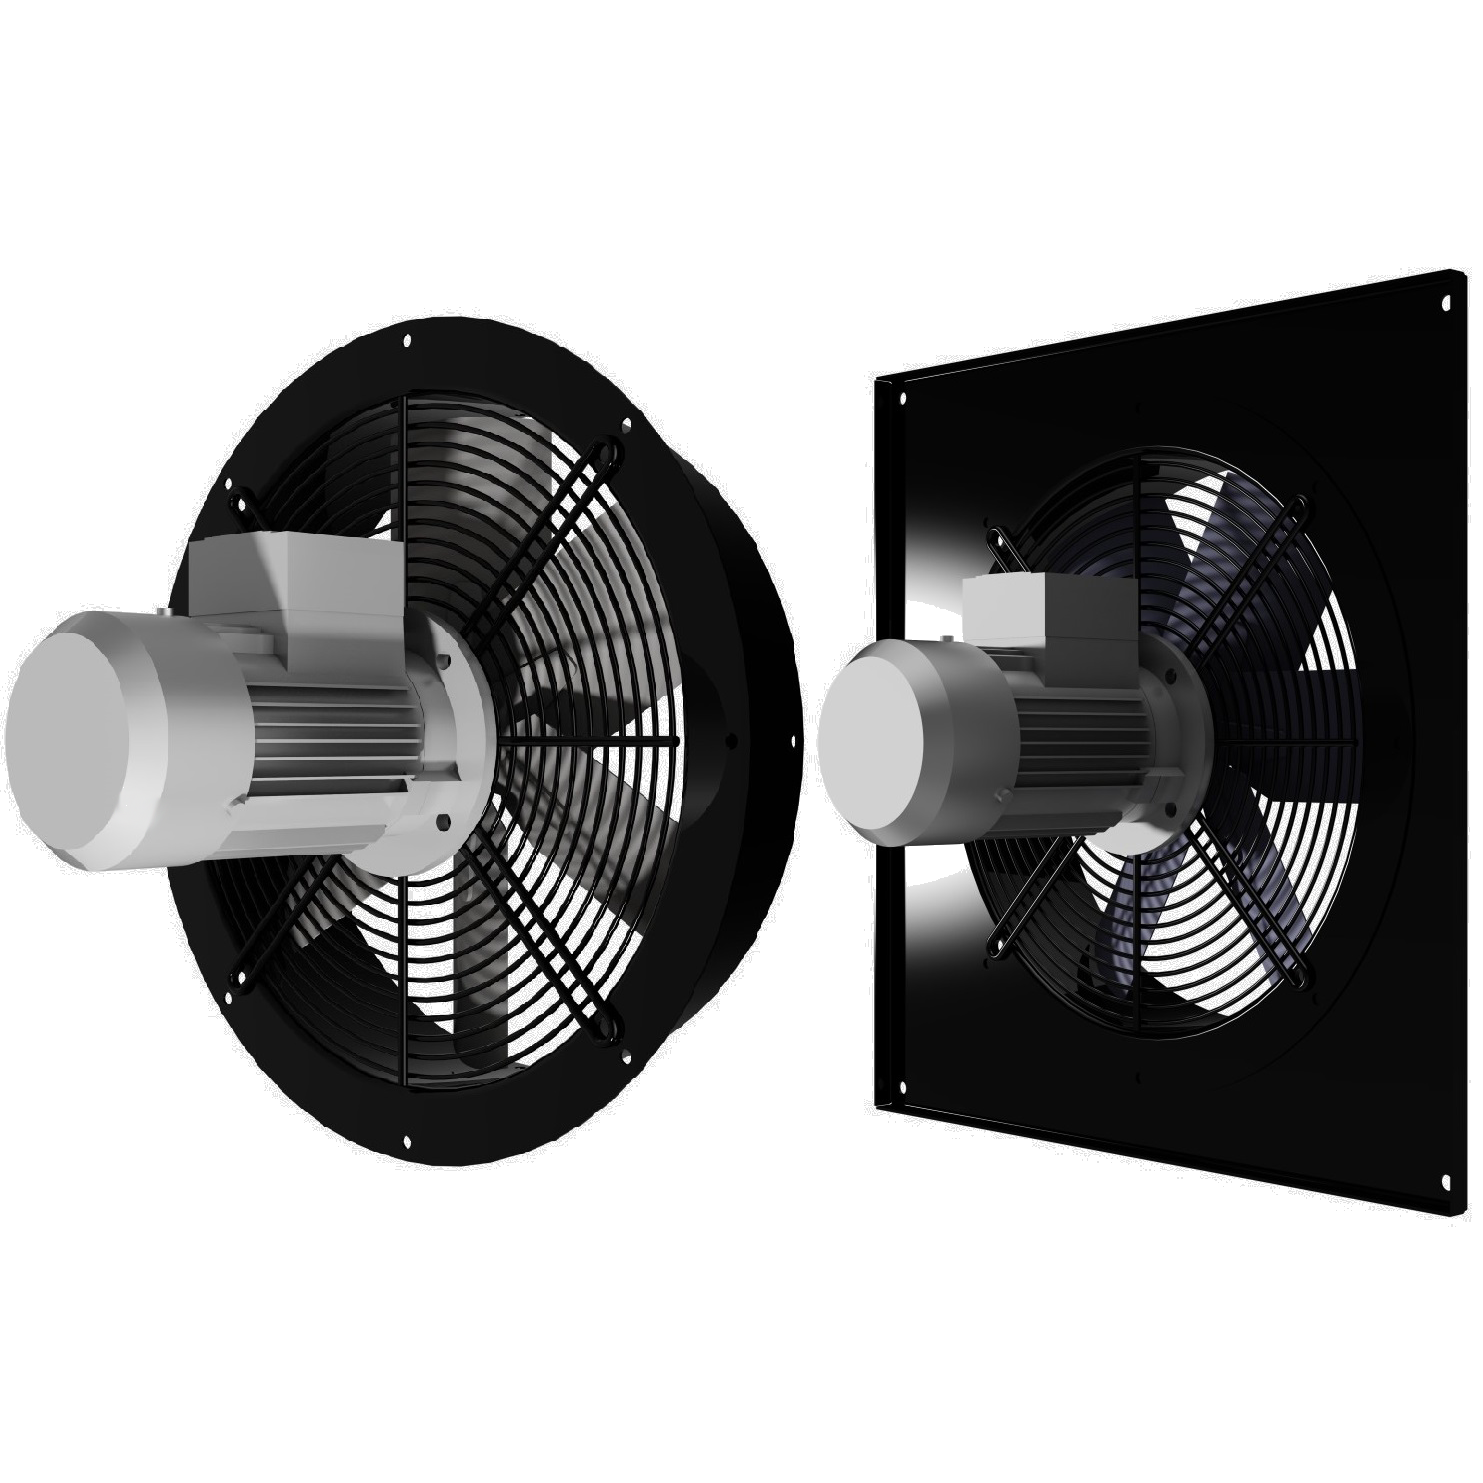 Вытяжной вентилятор воздуха. Axial Fan вентилятор. Осевые вентиляторы для вытяжной вентиляции 630. Вентилятор промышленный (100лд;Vents). Вентилятор вытяжной промышленный vbs100.